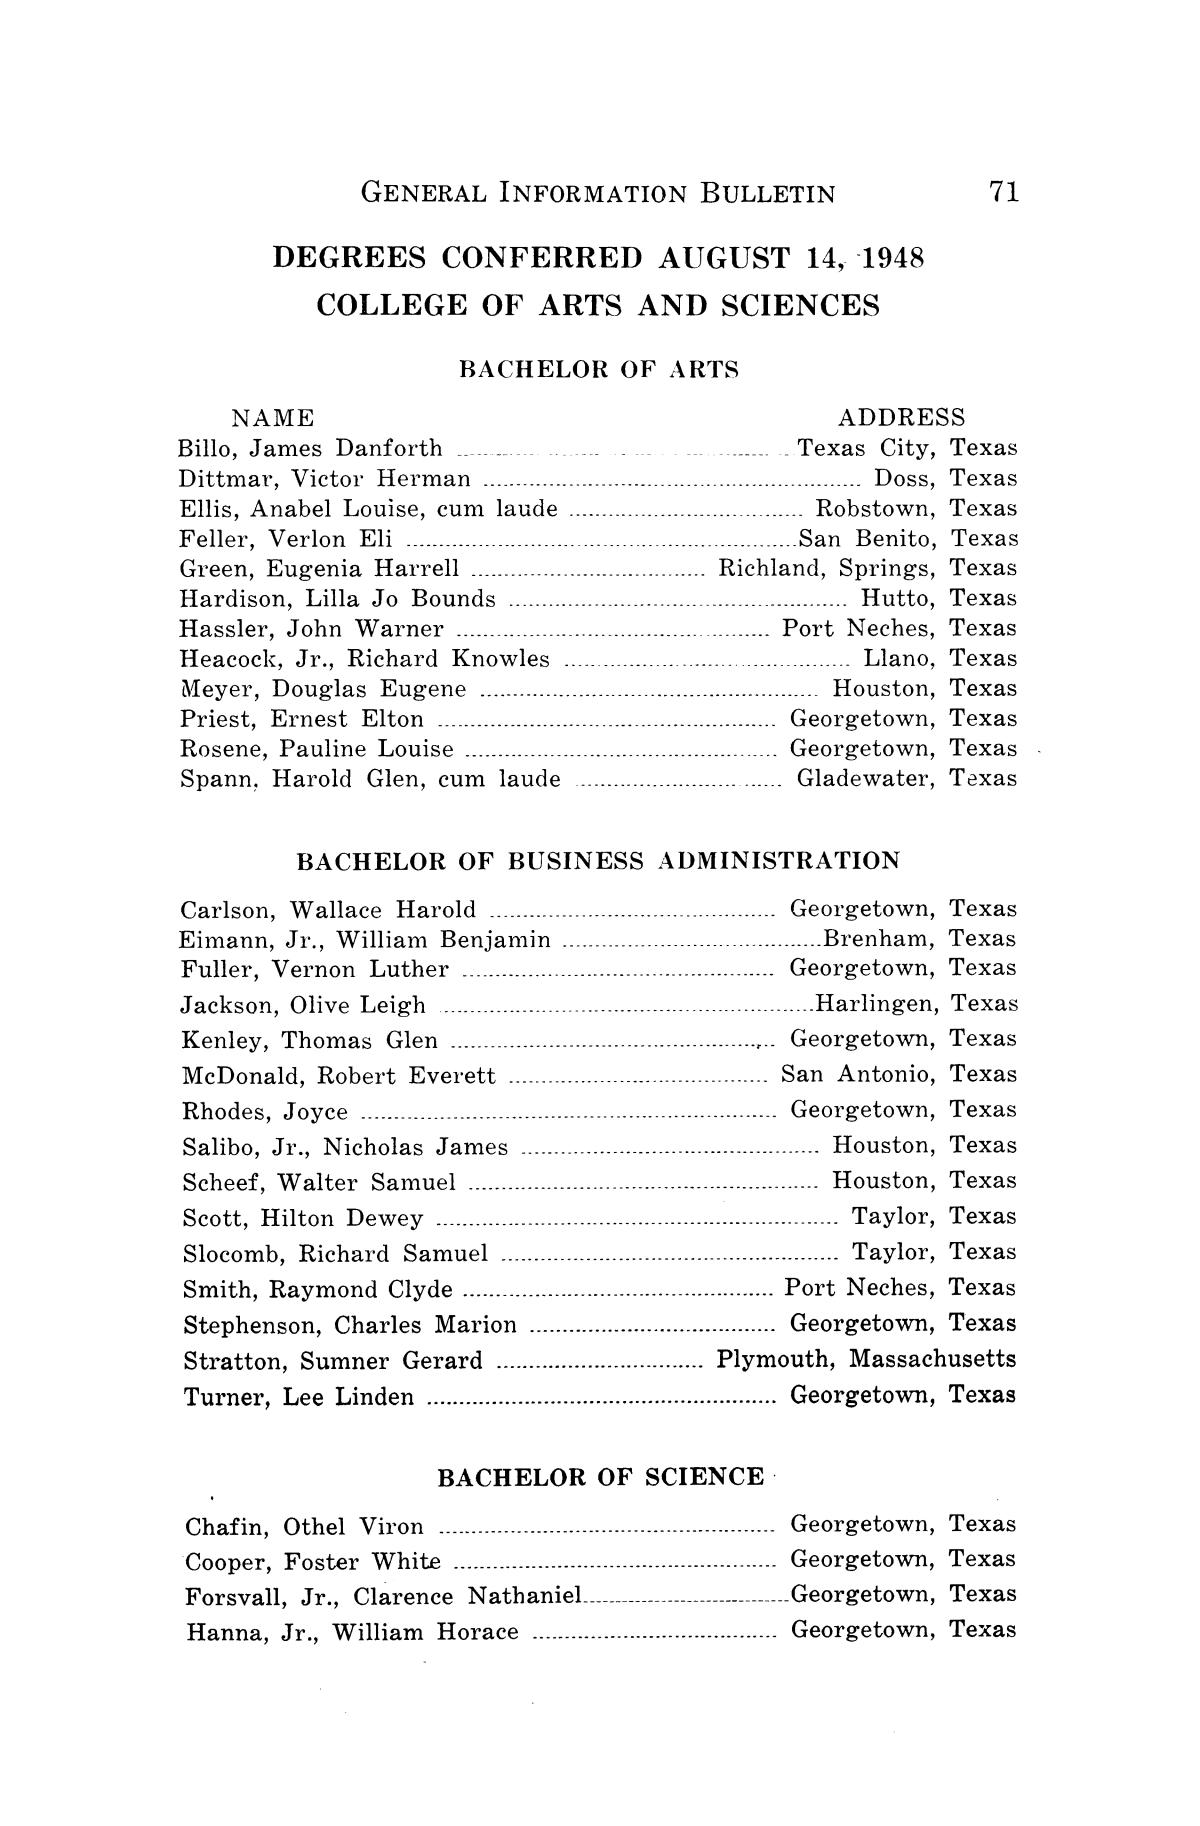 Catalogue of Daniel Baker College, 1948-1949
                                                
                                                    71
                                                